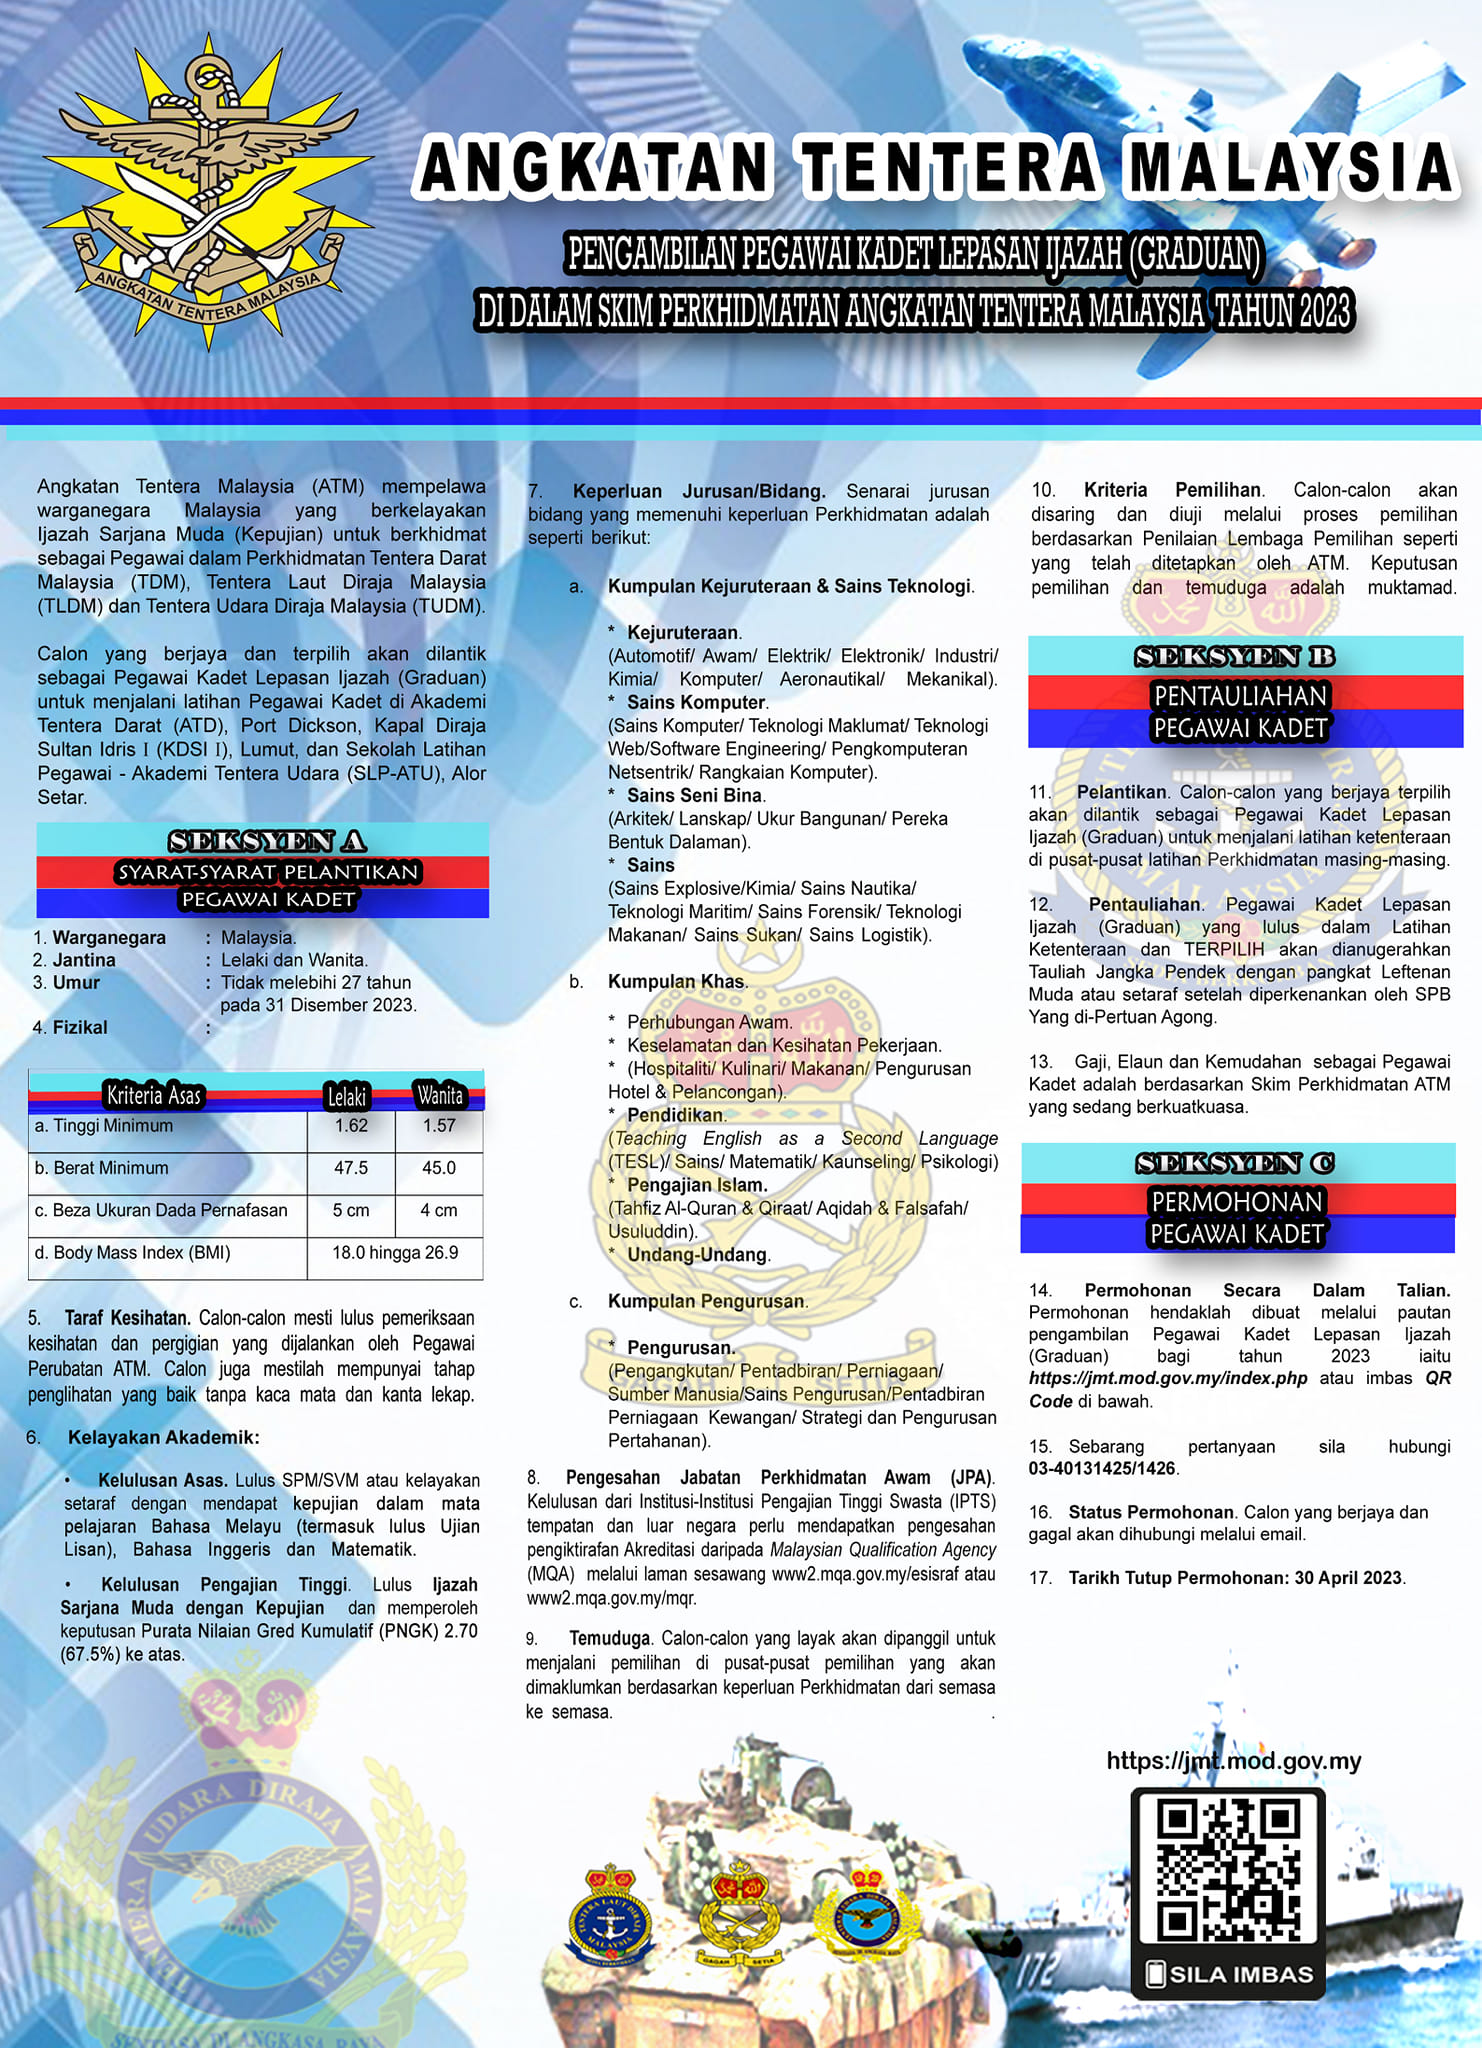 Iklan Jawatan Kosong Angkatan Tentera Malaysia (ATM)